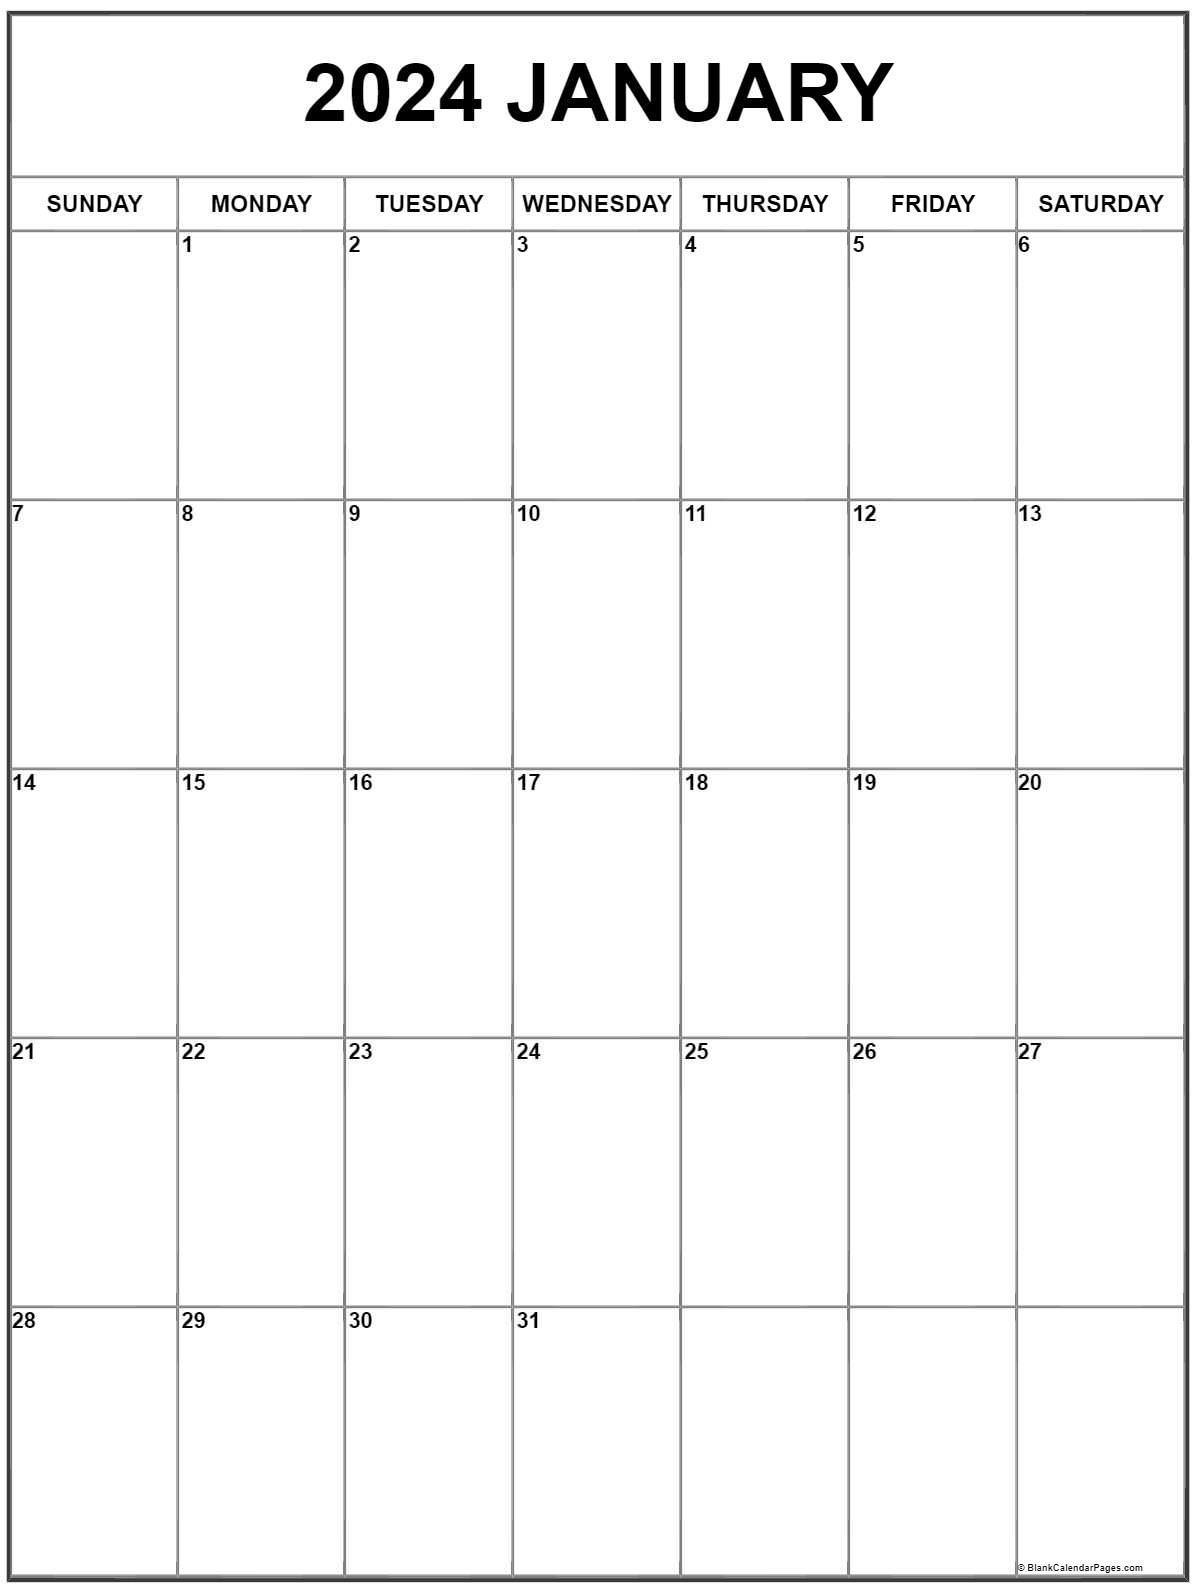 January 2023 Free Printable Calendar Customize And Print 0790